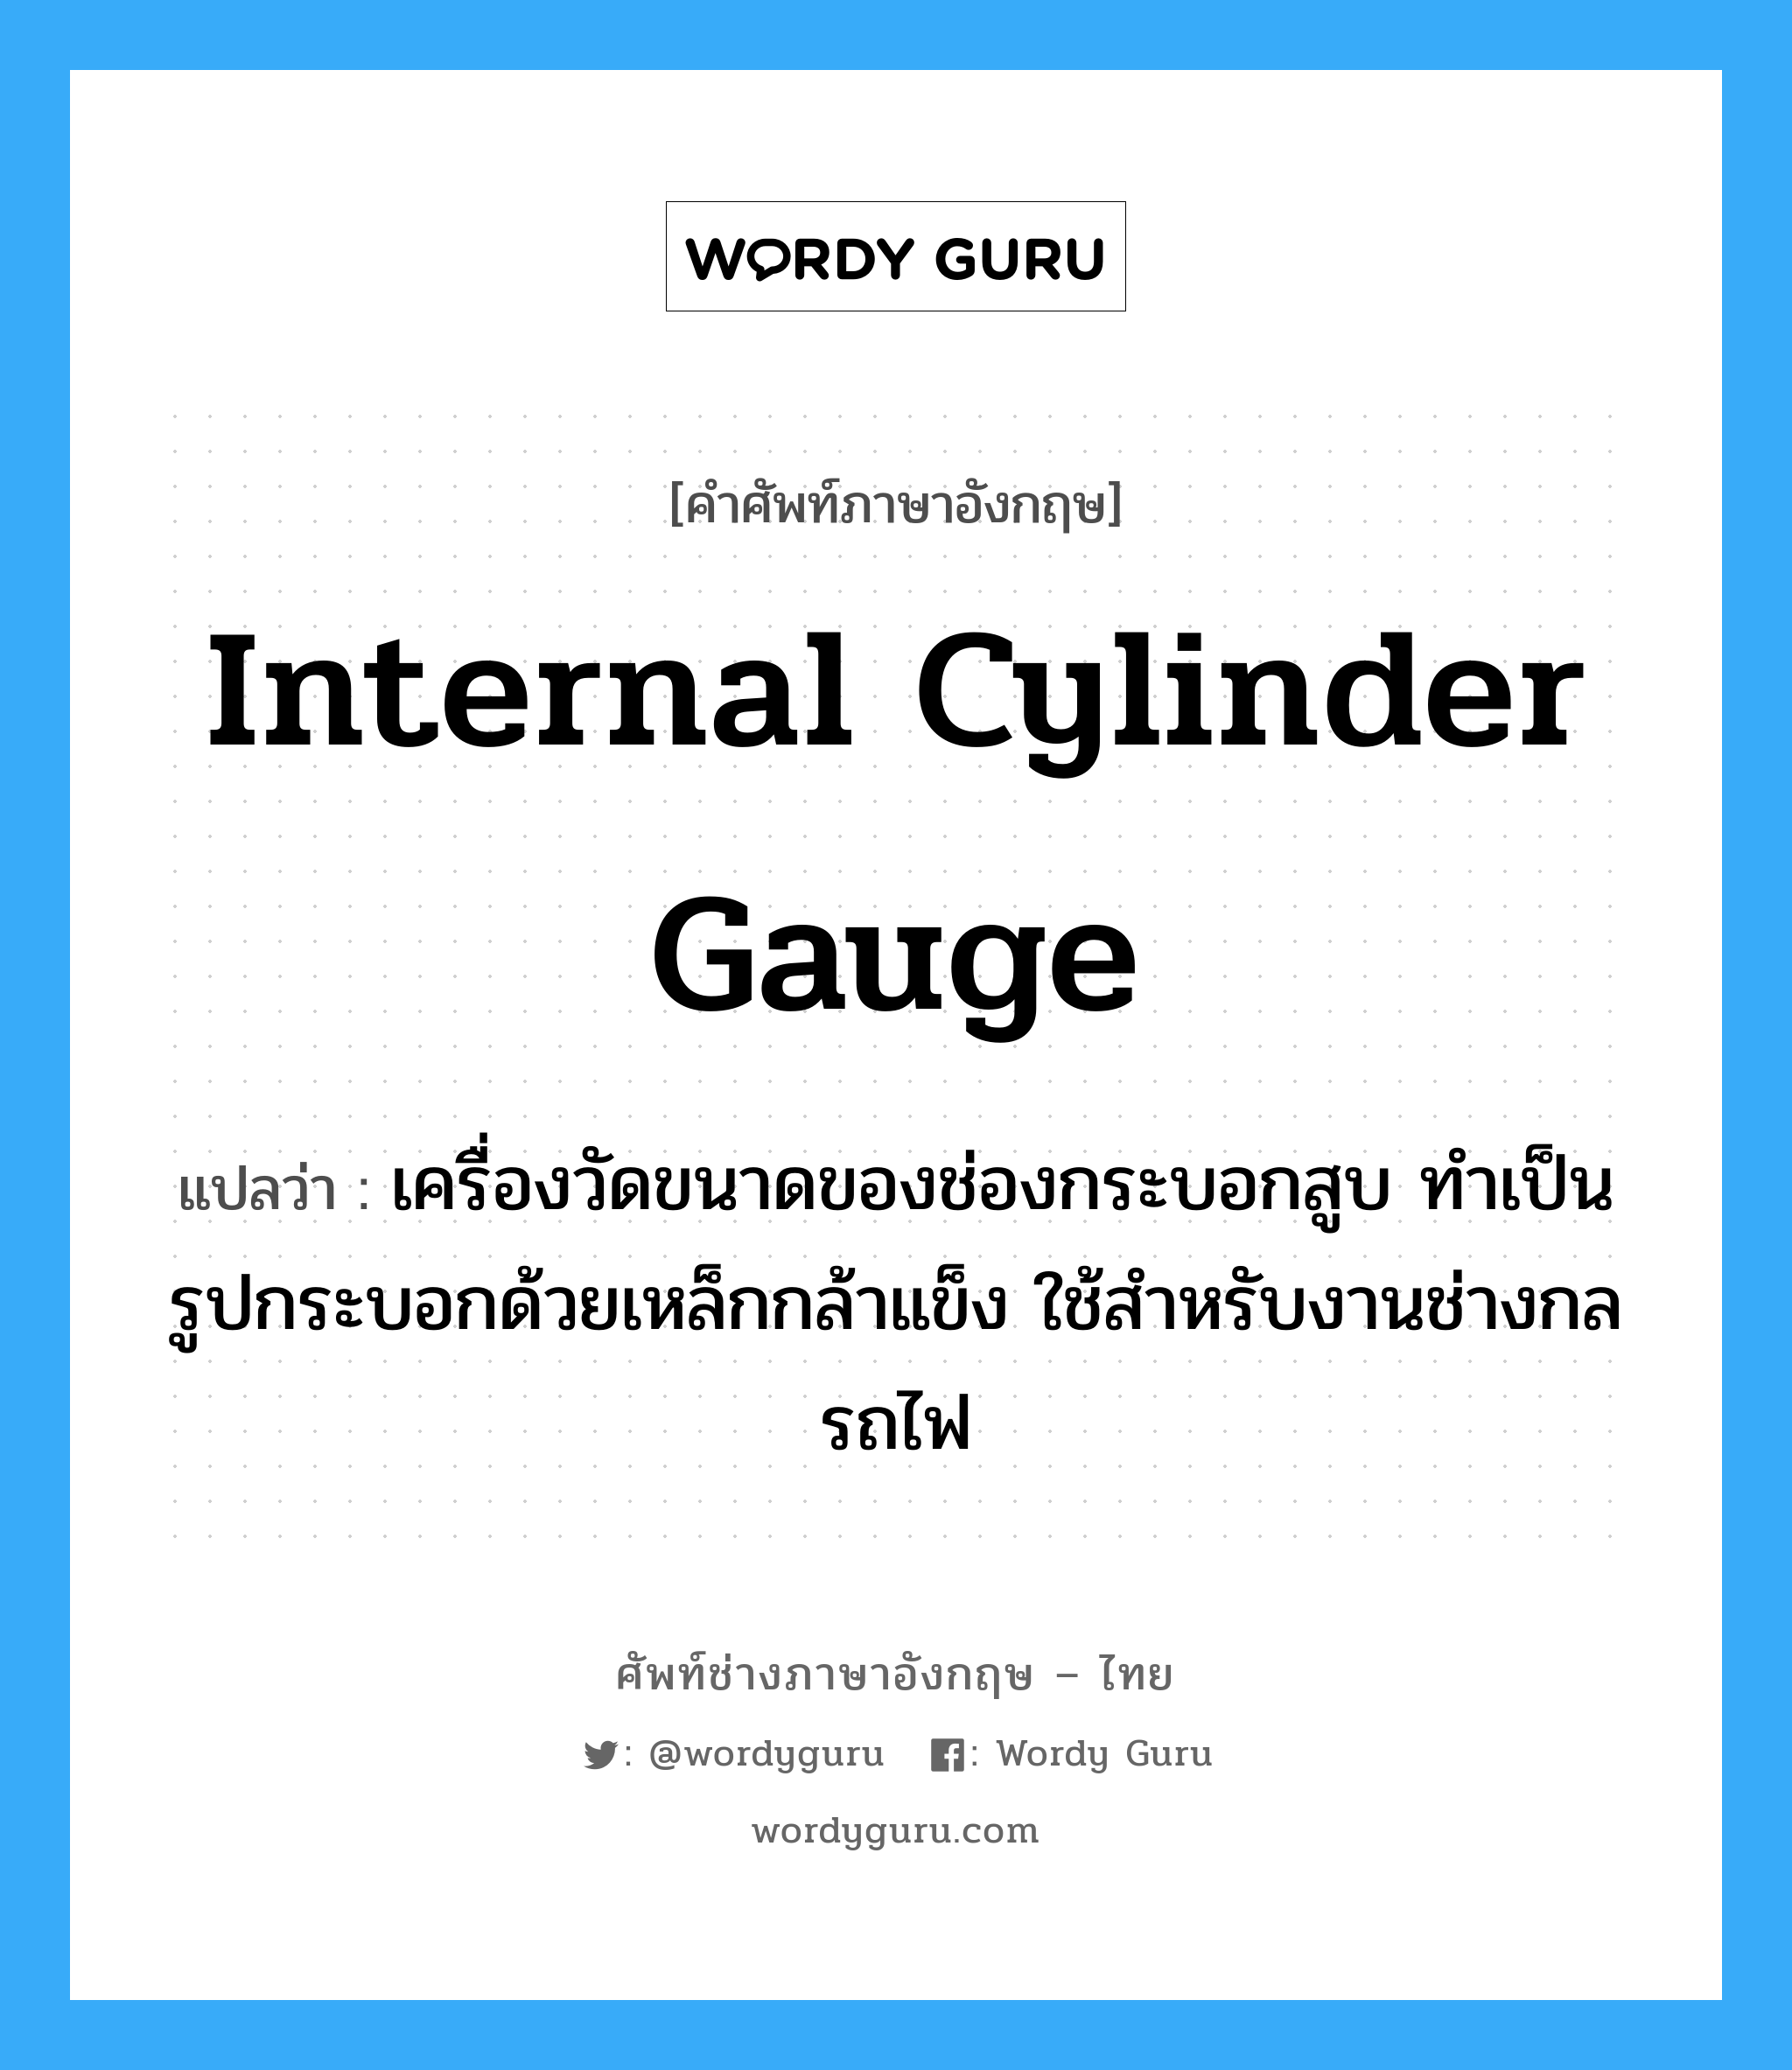 internal cylinder gauge แปลว่า?, คำศัพท์ช่างภาษาอังกฤษ - ไทย internal cylinder gauge คำศัพท์ภาษาอังกฤษ internal cylinder gauge แปลว่า เครื่องวัดขนาดของช่องกระบอกสูบ ทำเป็นรูปกระบอกด้วยเหล็กกล้าแข็ง ใช้สำหรับงานช่างกลรถไฟ